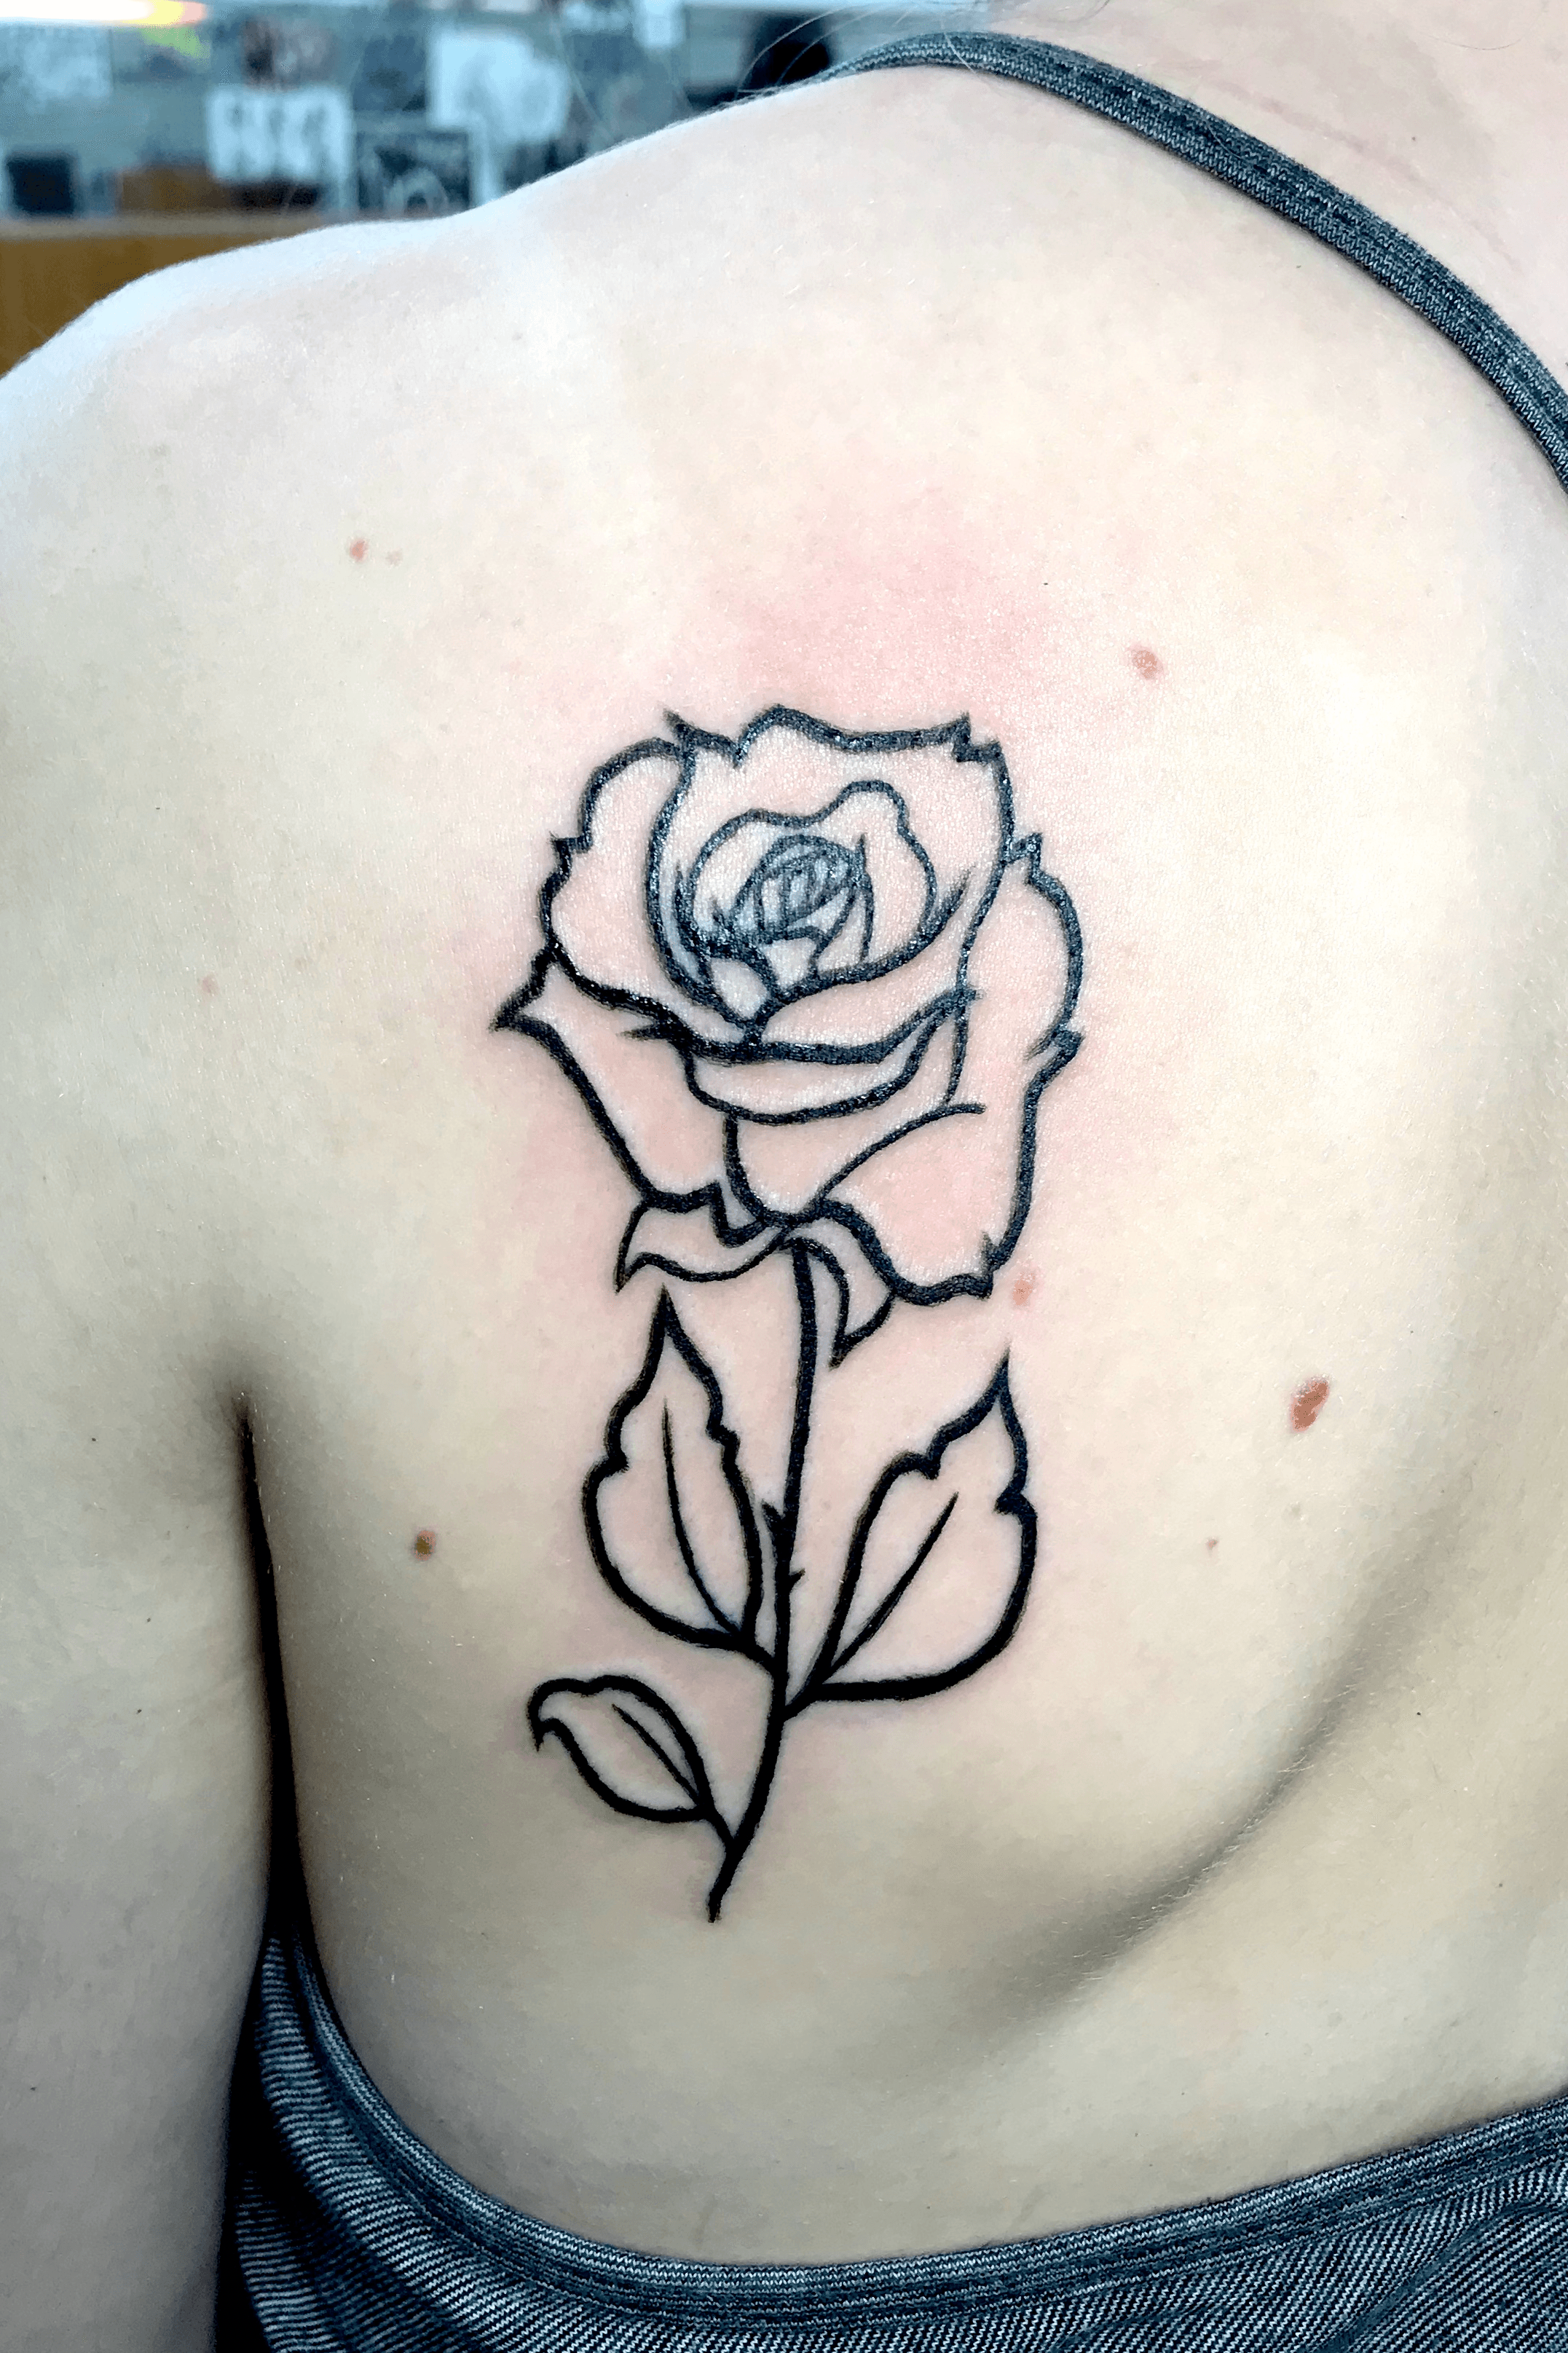 Flower Tattoo Images  Free Download on Freepik